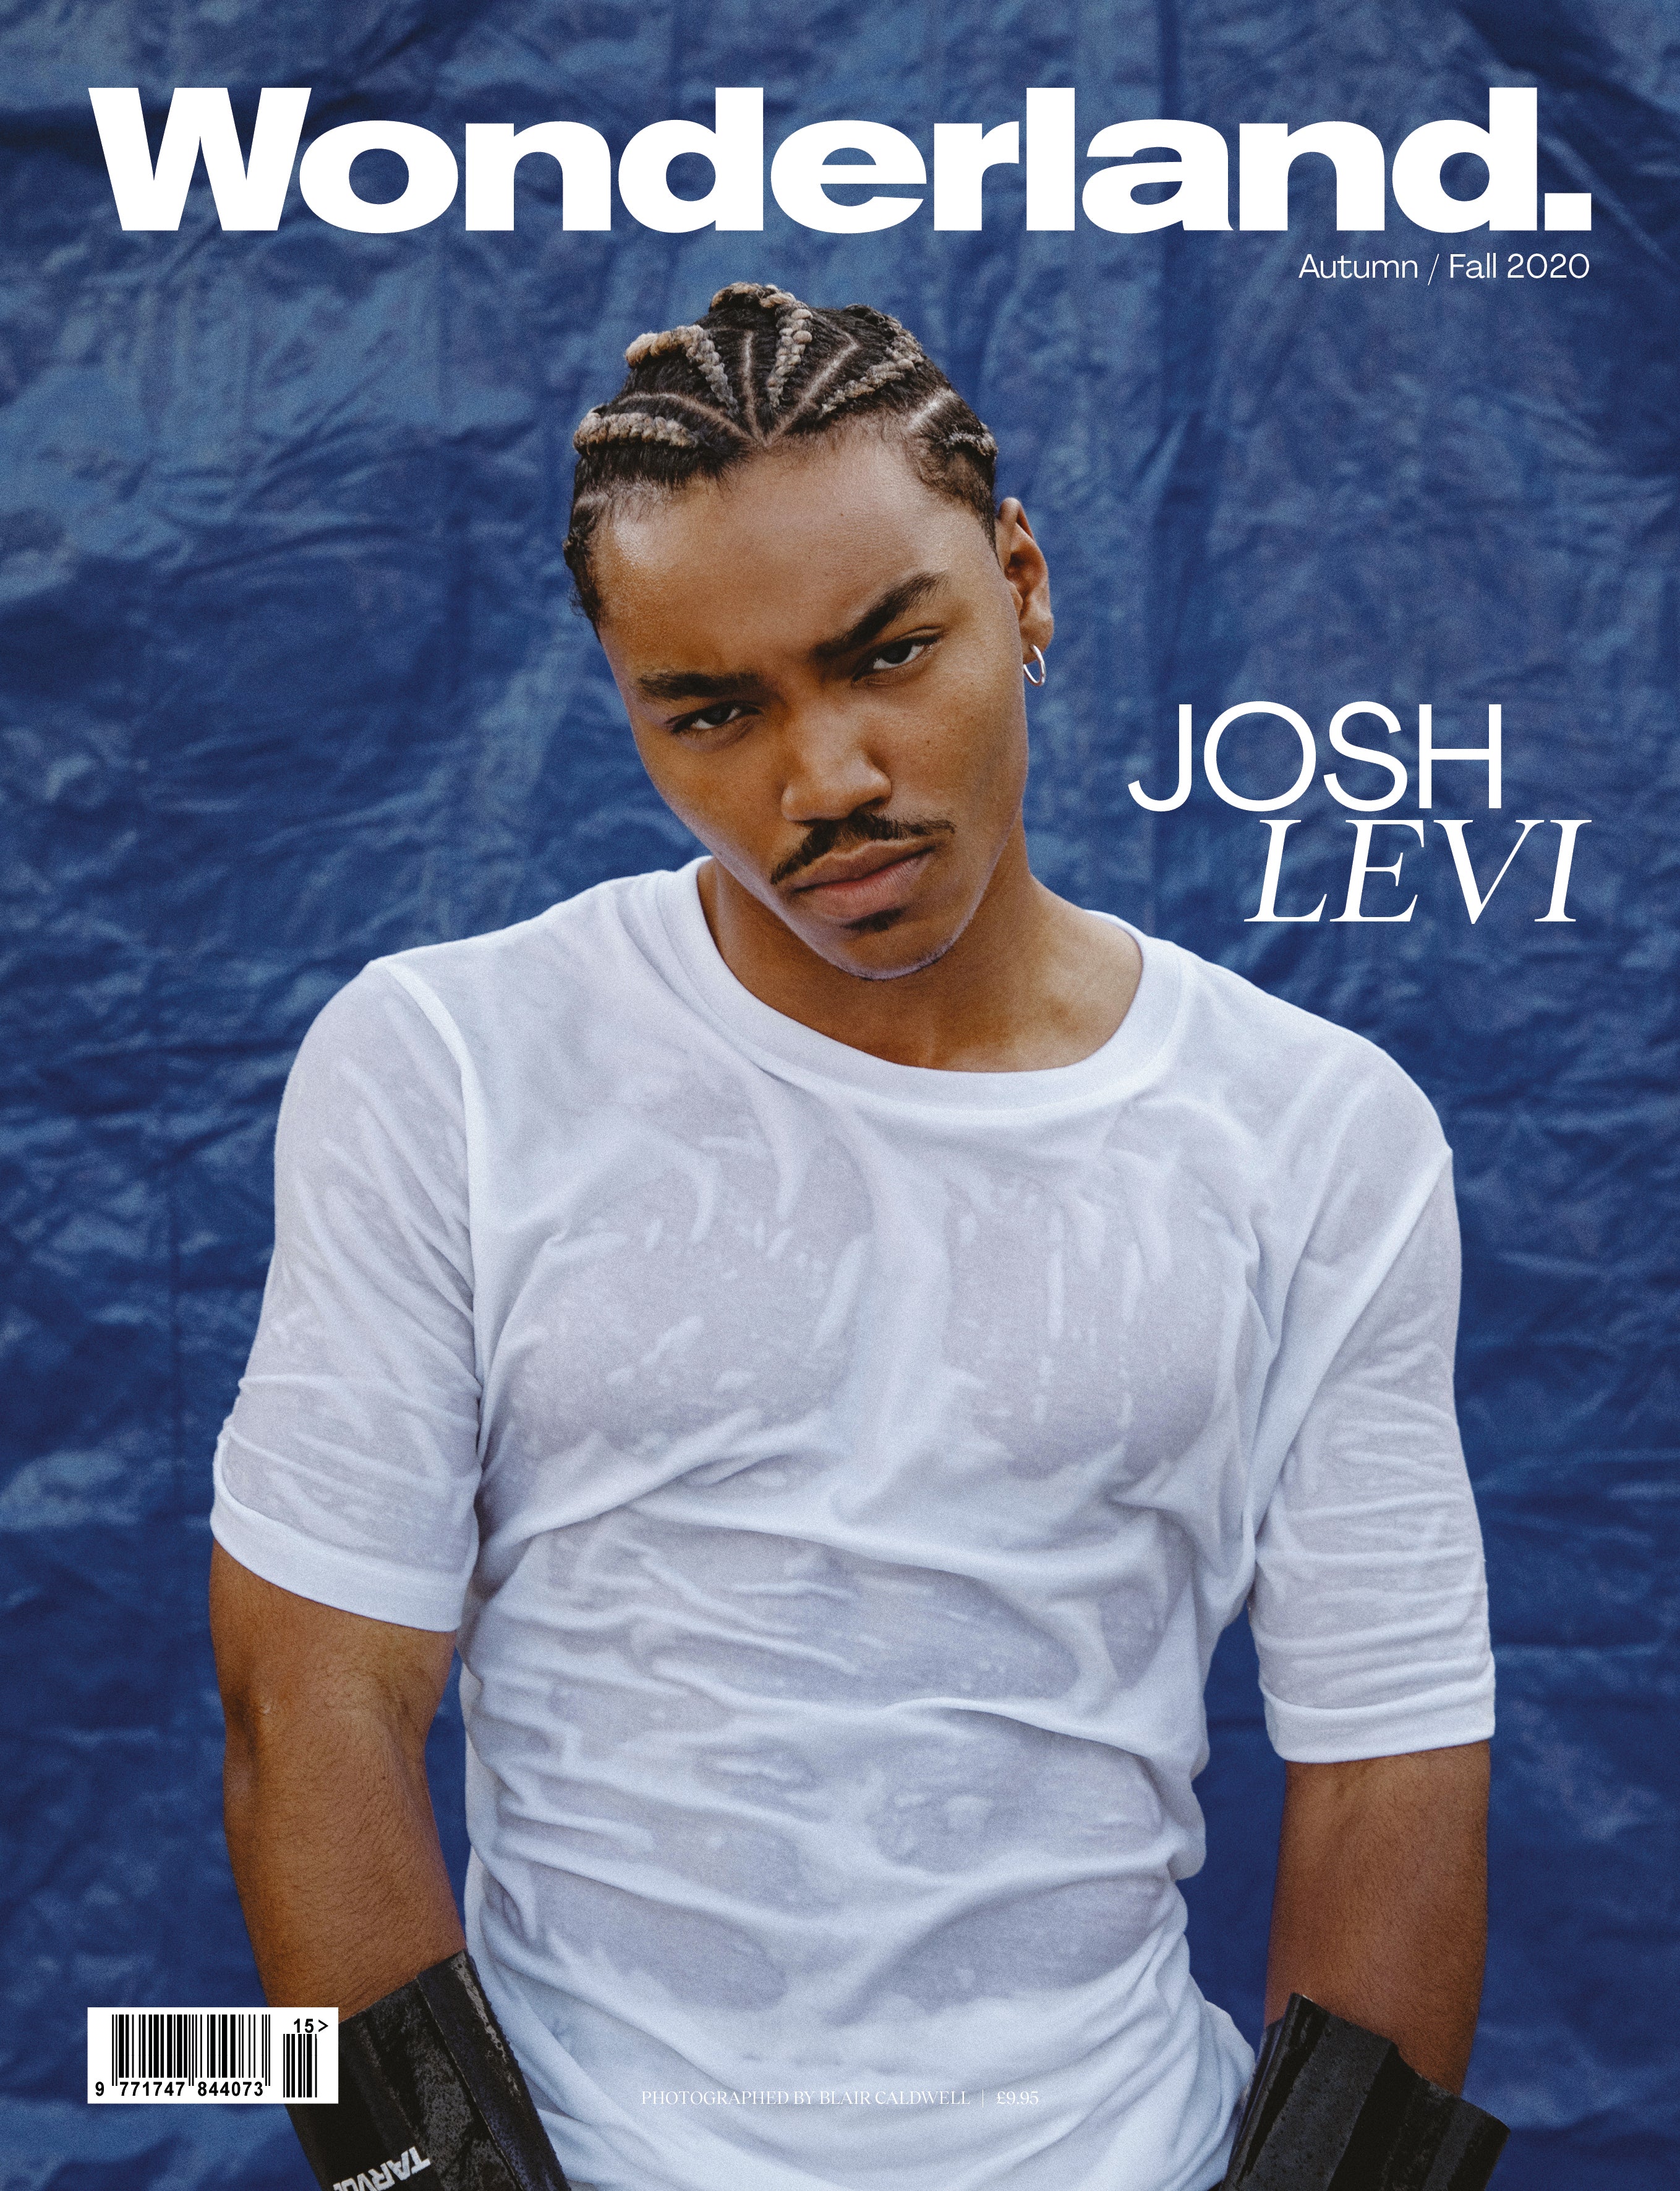 JOSH LEVI COVERS WONDERLAND AUTUMN 2020 ISSUE — Wonderland